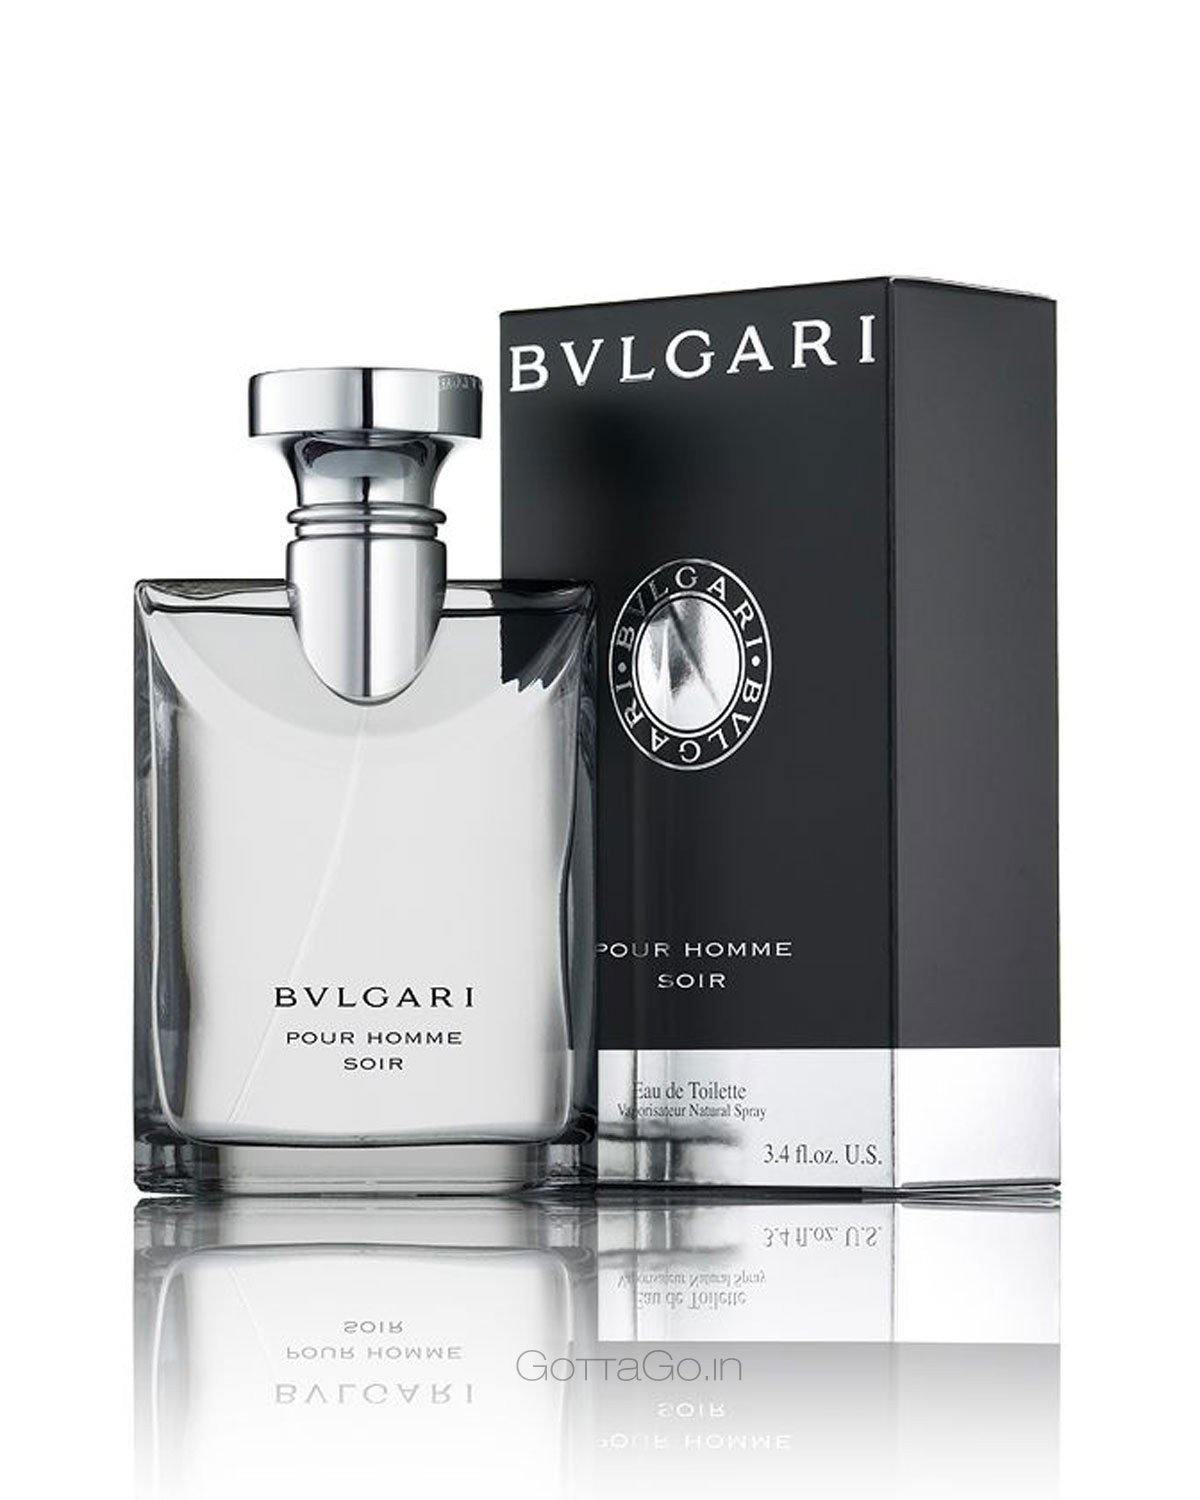 Bvlgari Perfume - Bvlgari Man Extreme - perfume for men, 100 ml